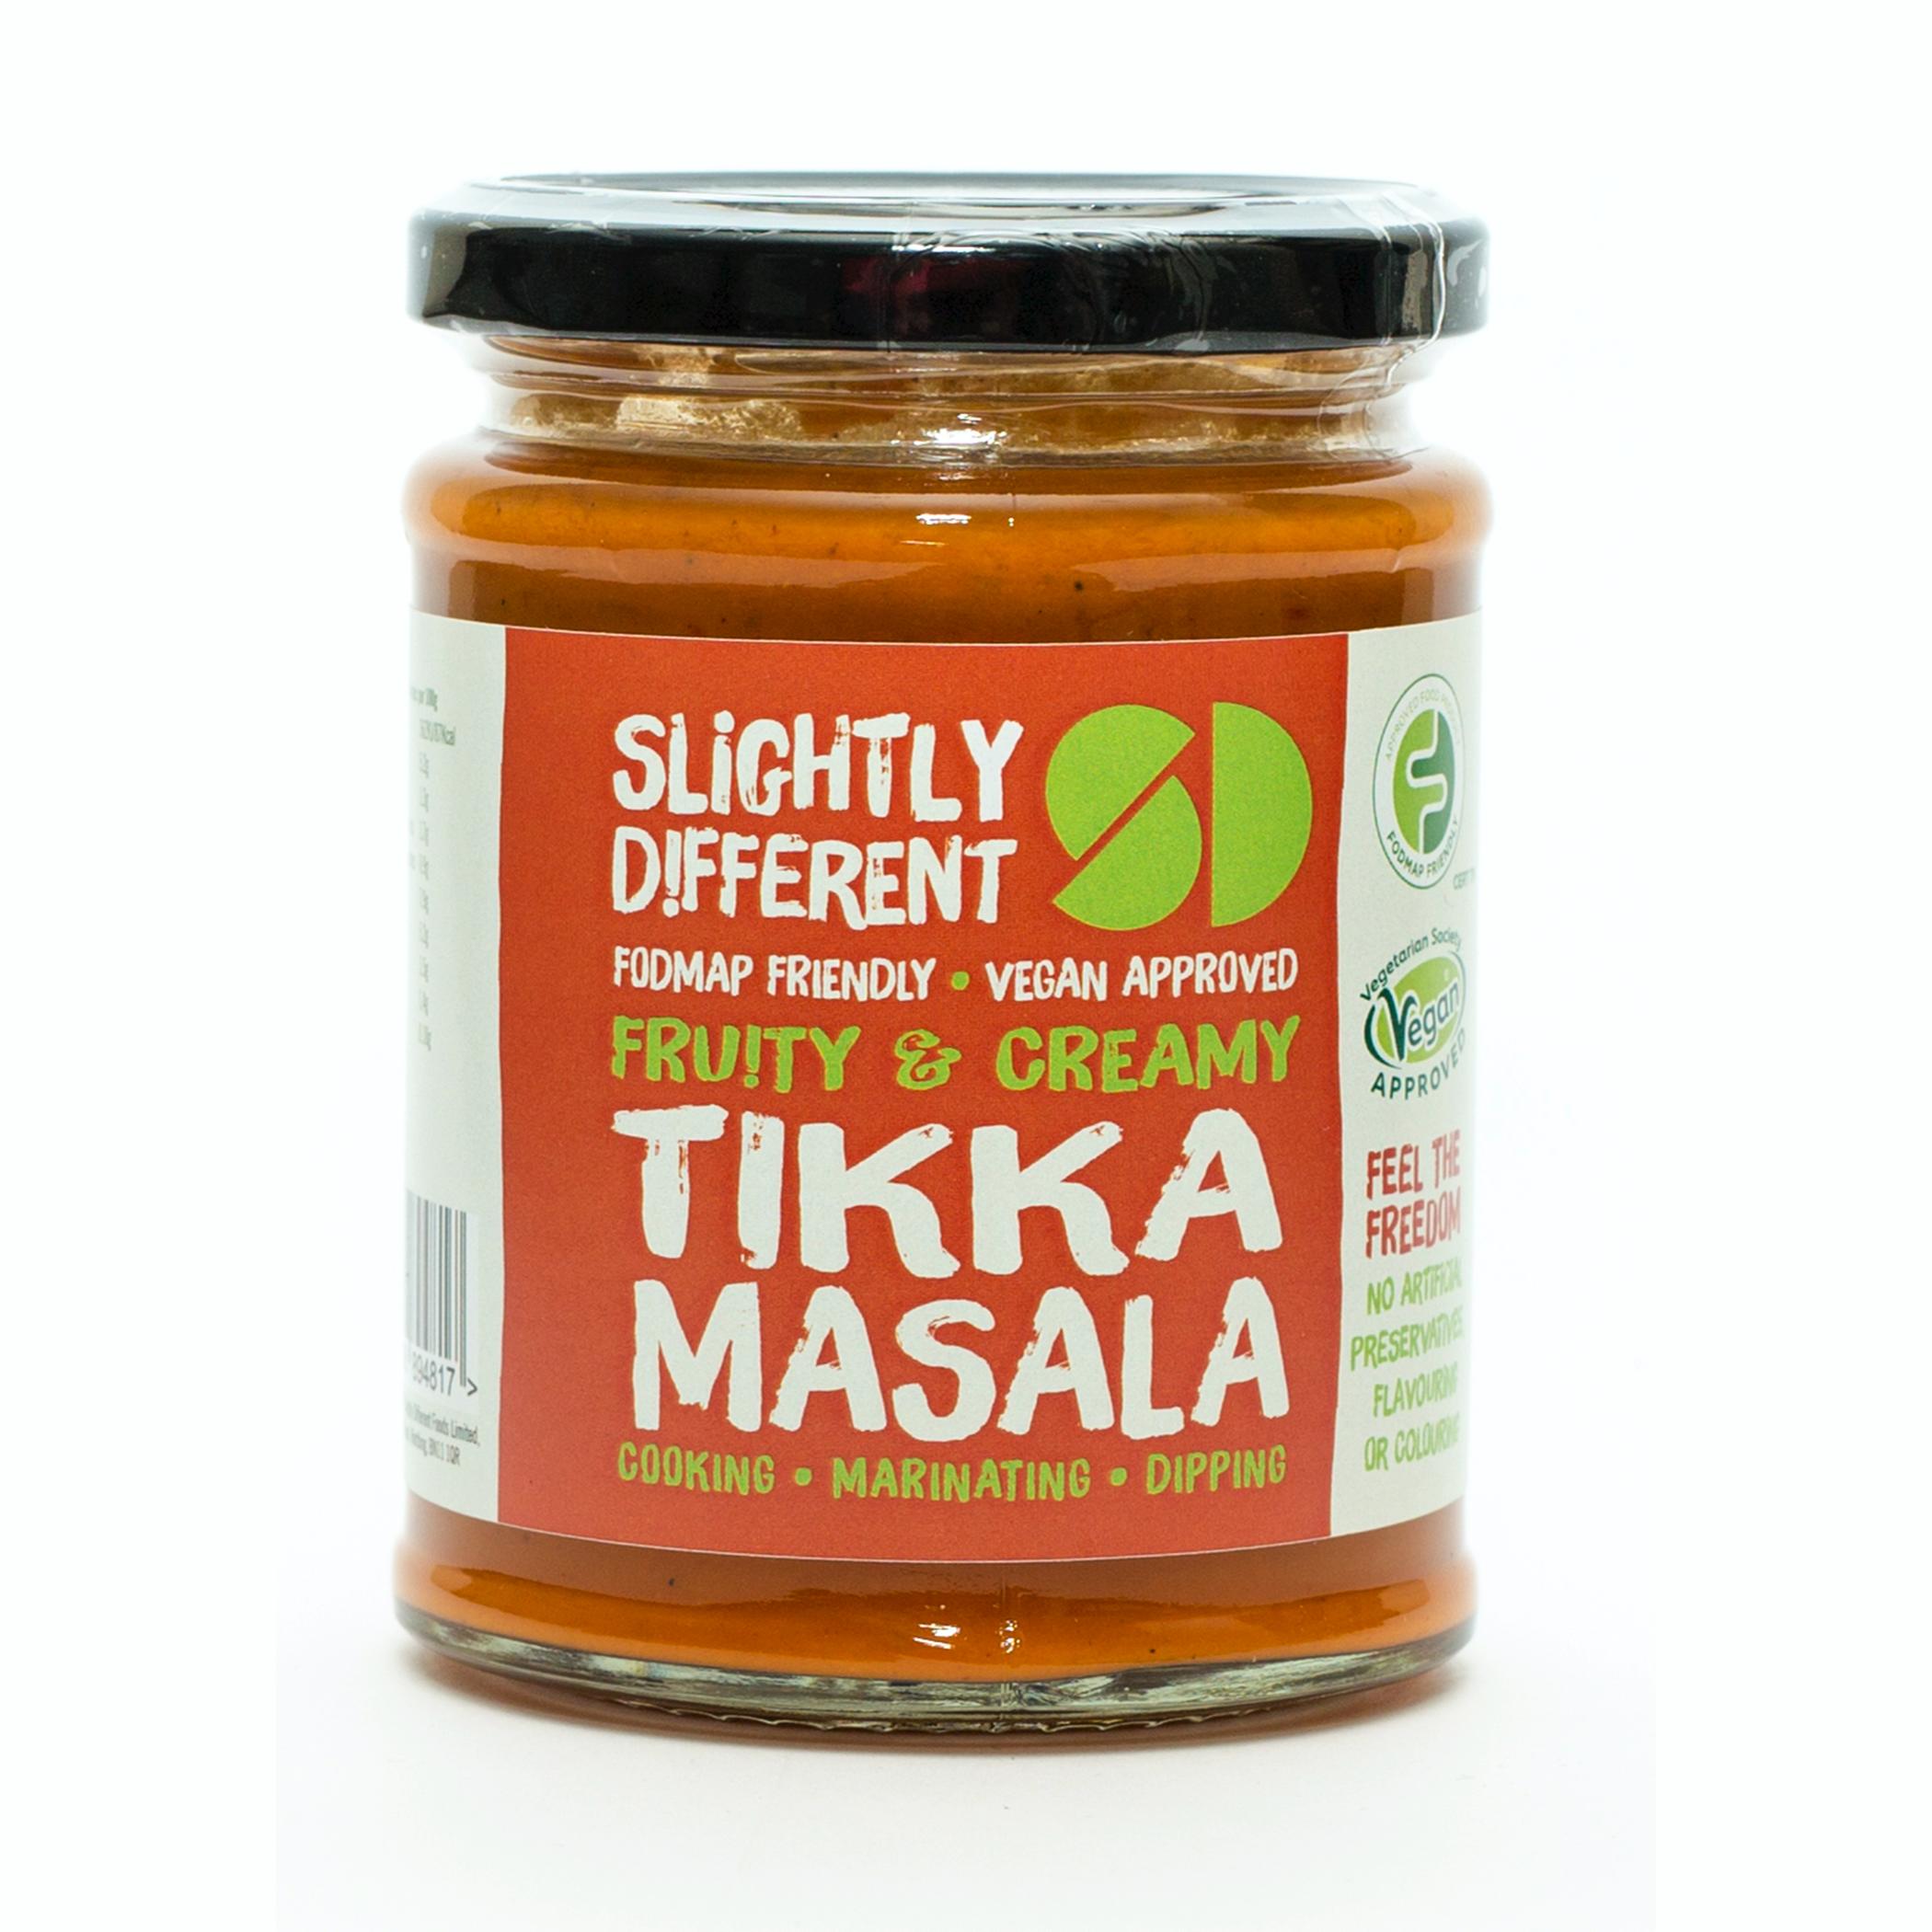 A jar of Slightly Different's Tikka Massala Sauce